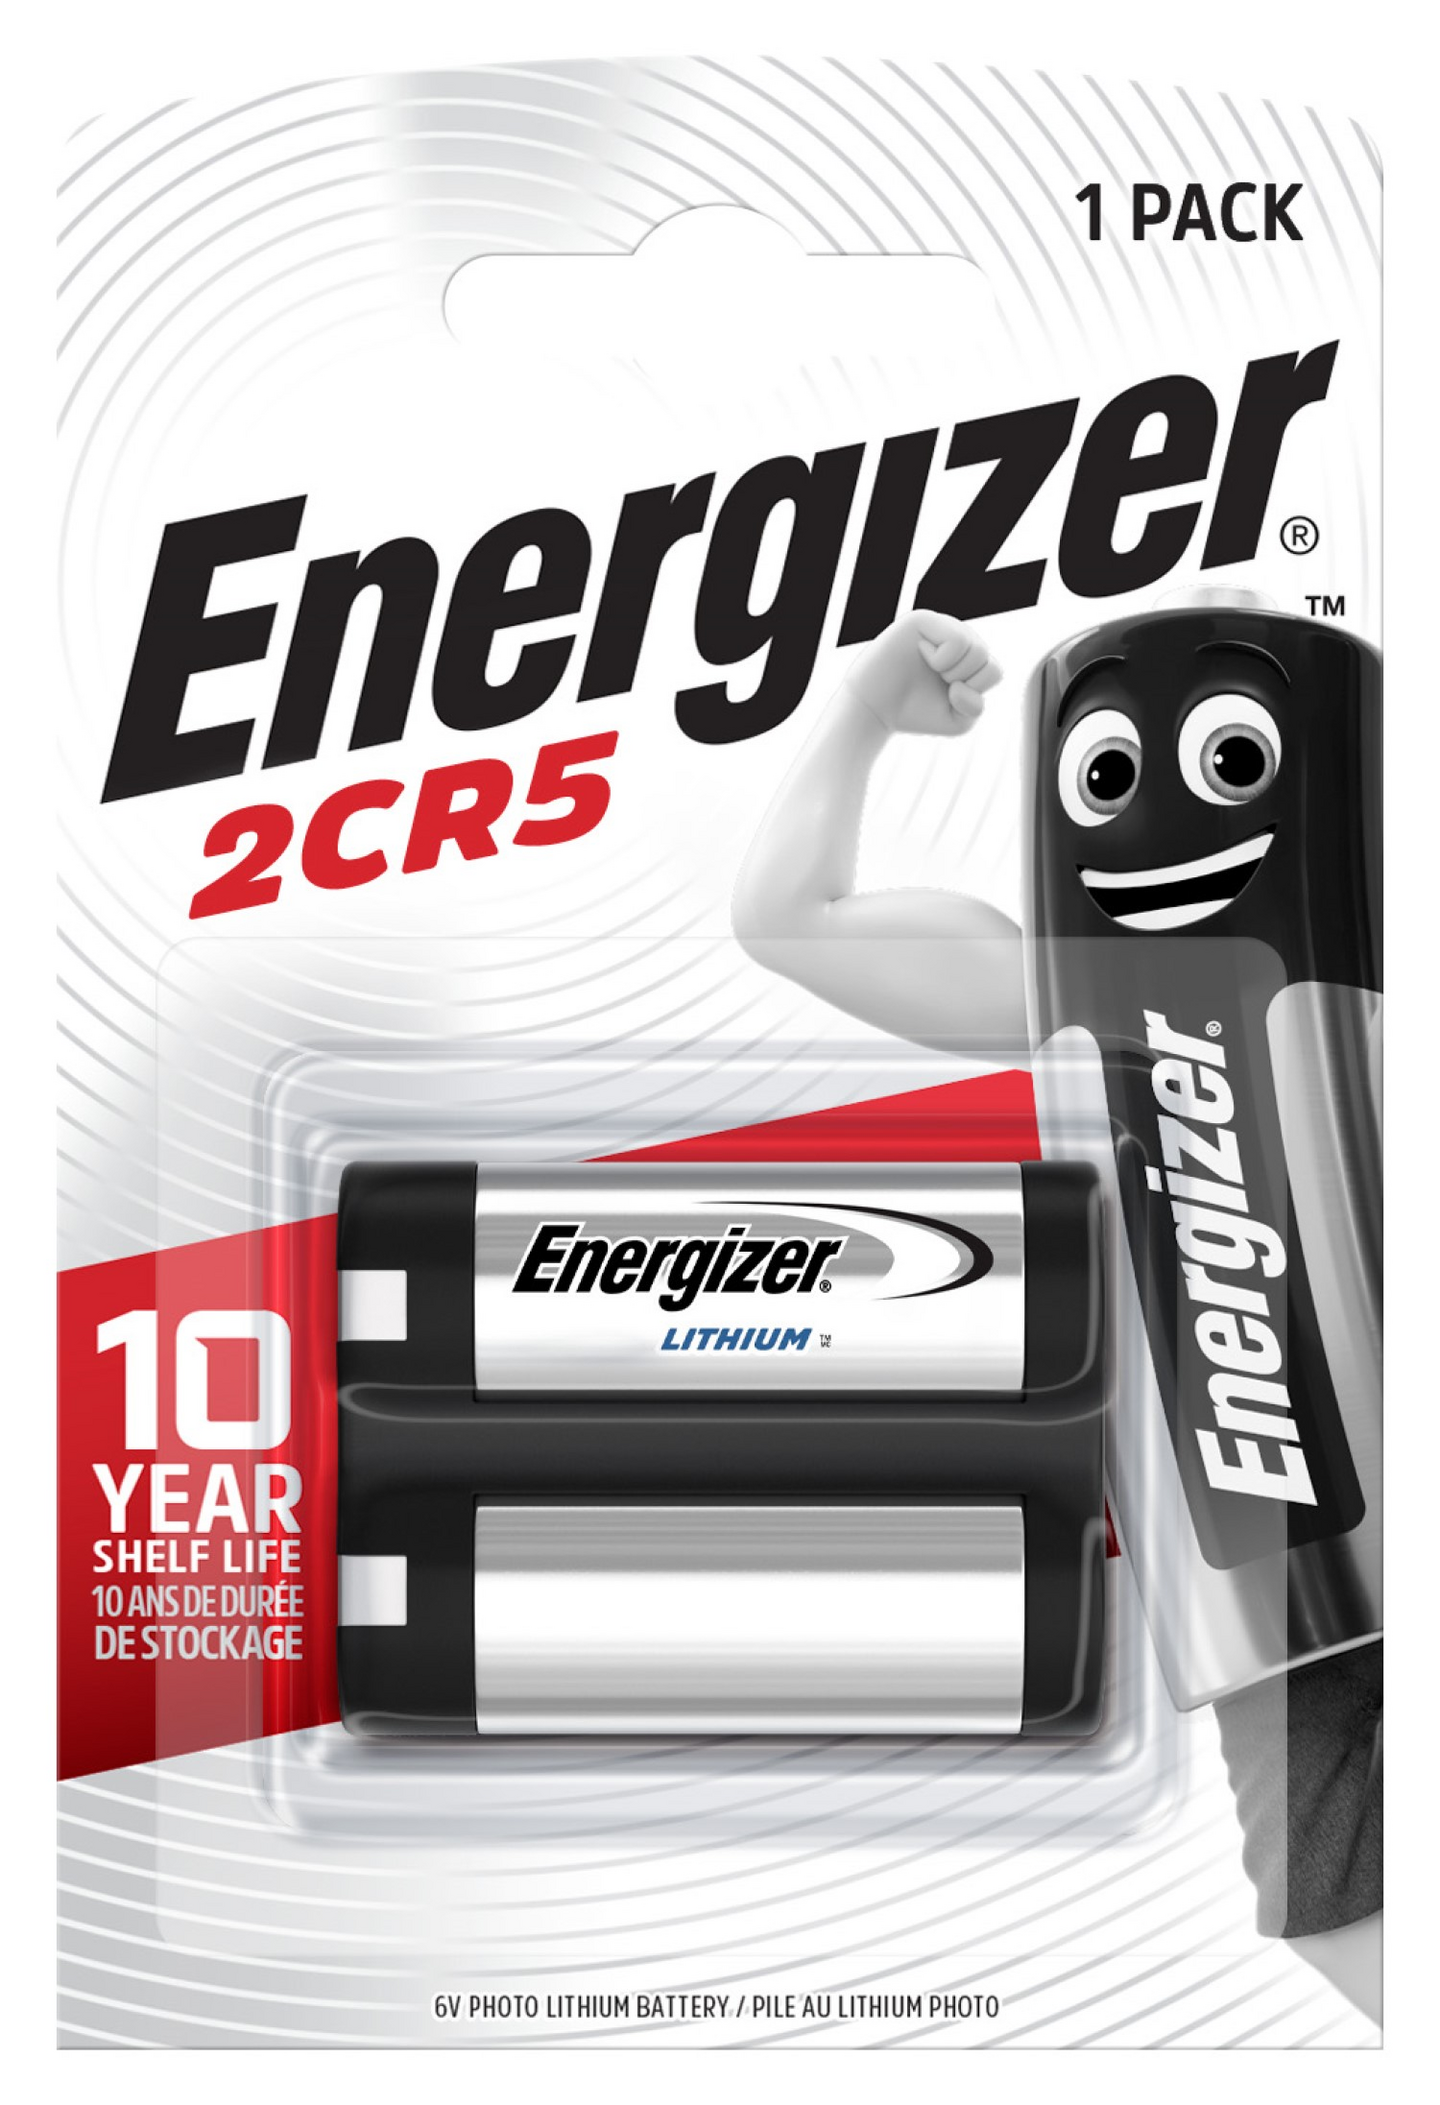 Energizer 2CR5 (245) Lithium Photo